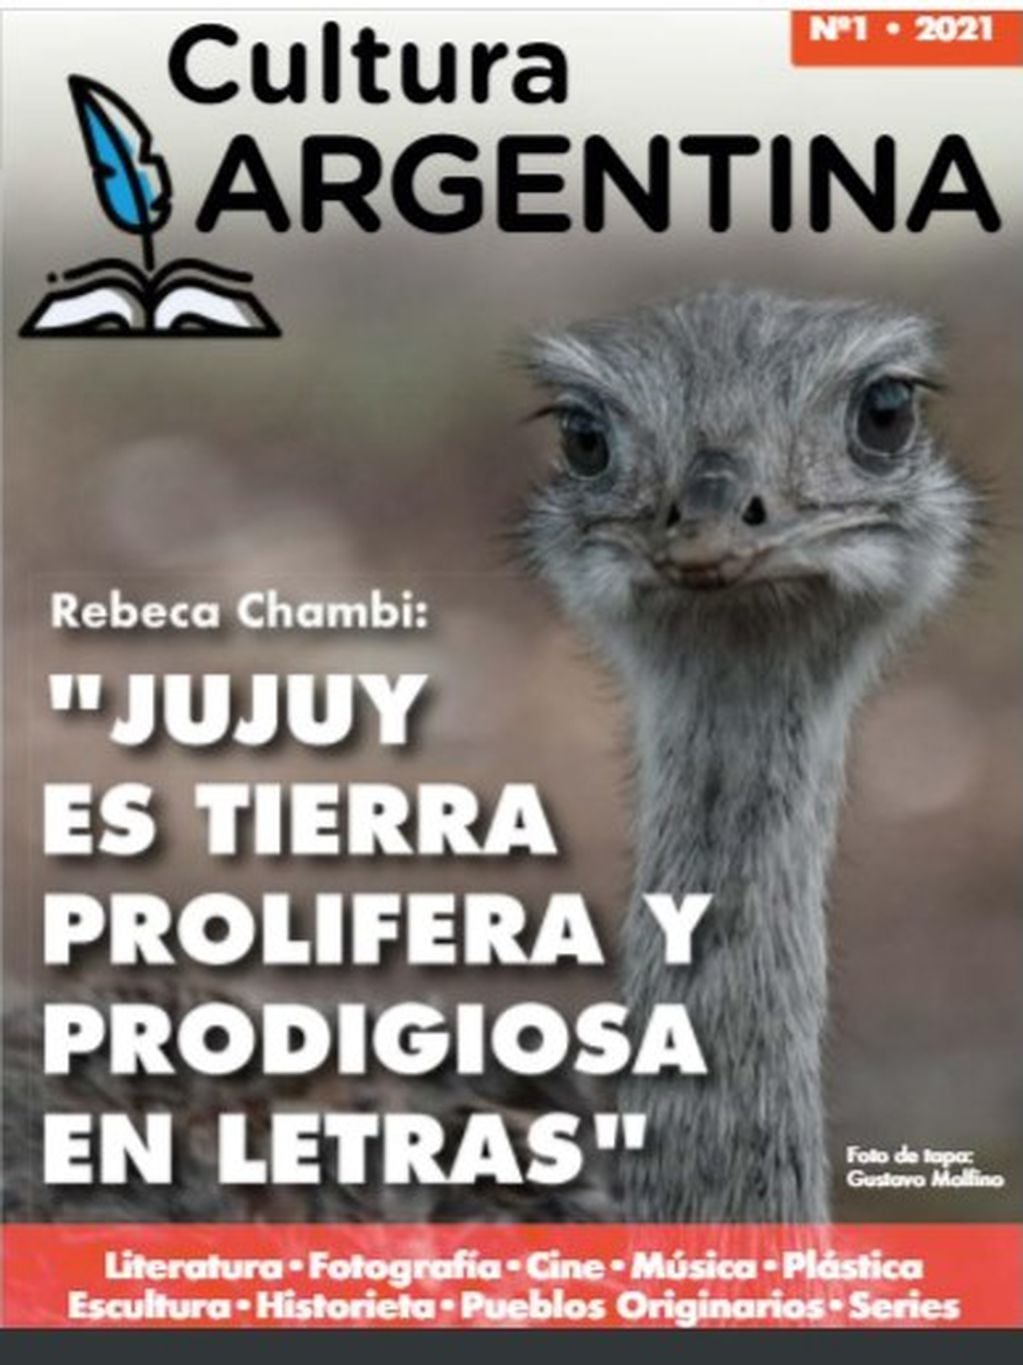 Portada de la revista revista Cultura Argentina, que incluye una entrevista a la jujeña Rebeca Chambi.